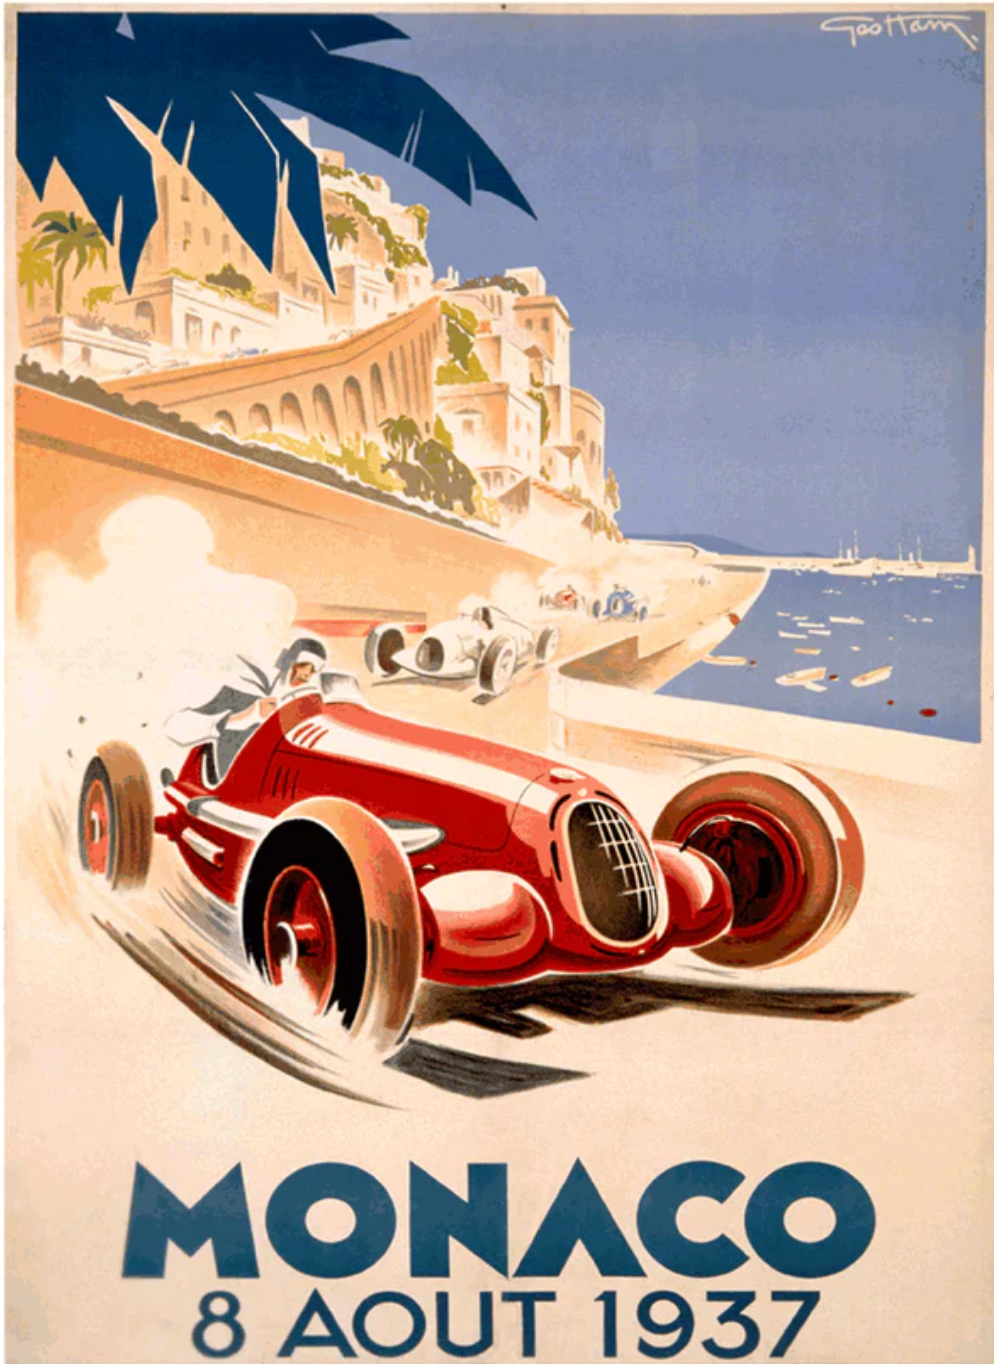 Monaco Grand Prix 1937 - Travel Art Print by Géo Ham